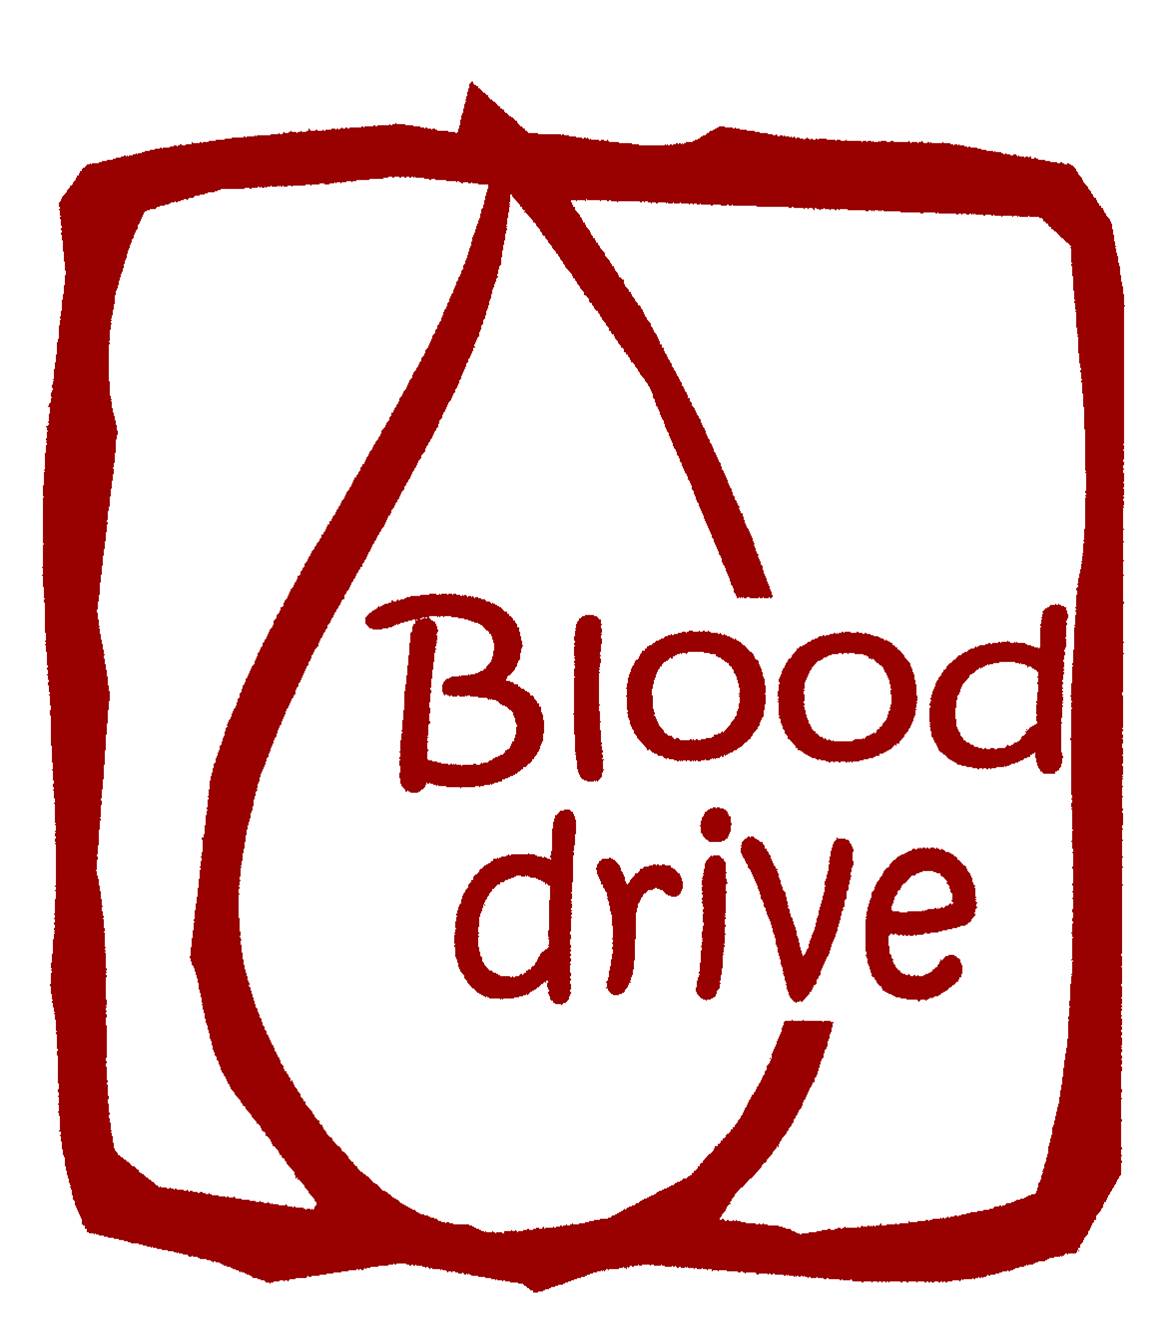 clip art blood drive - photo #1